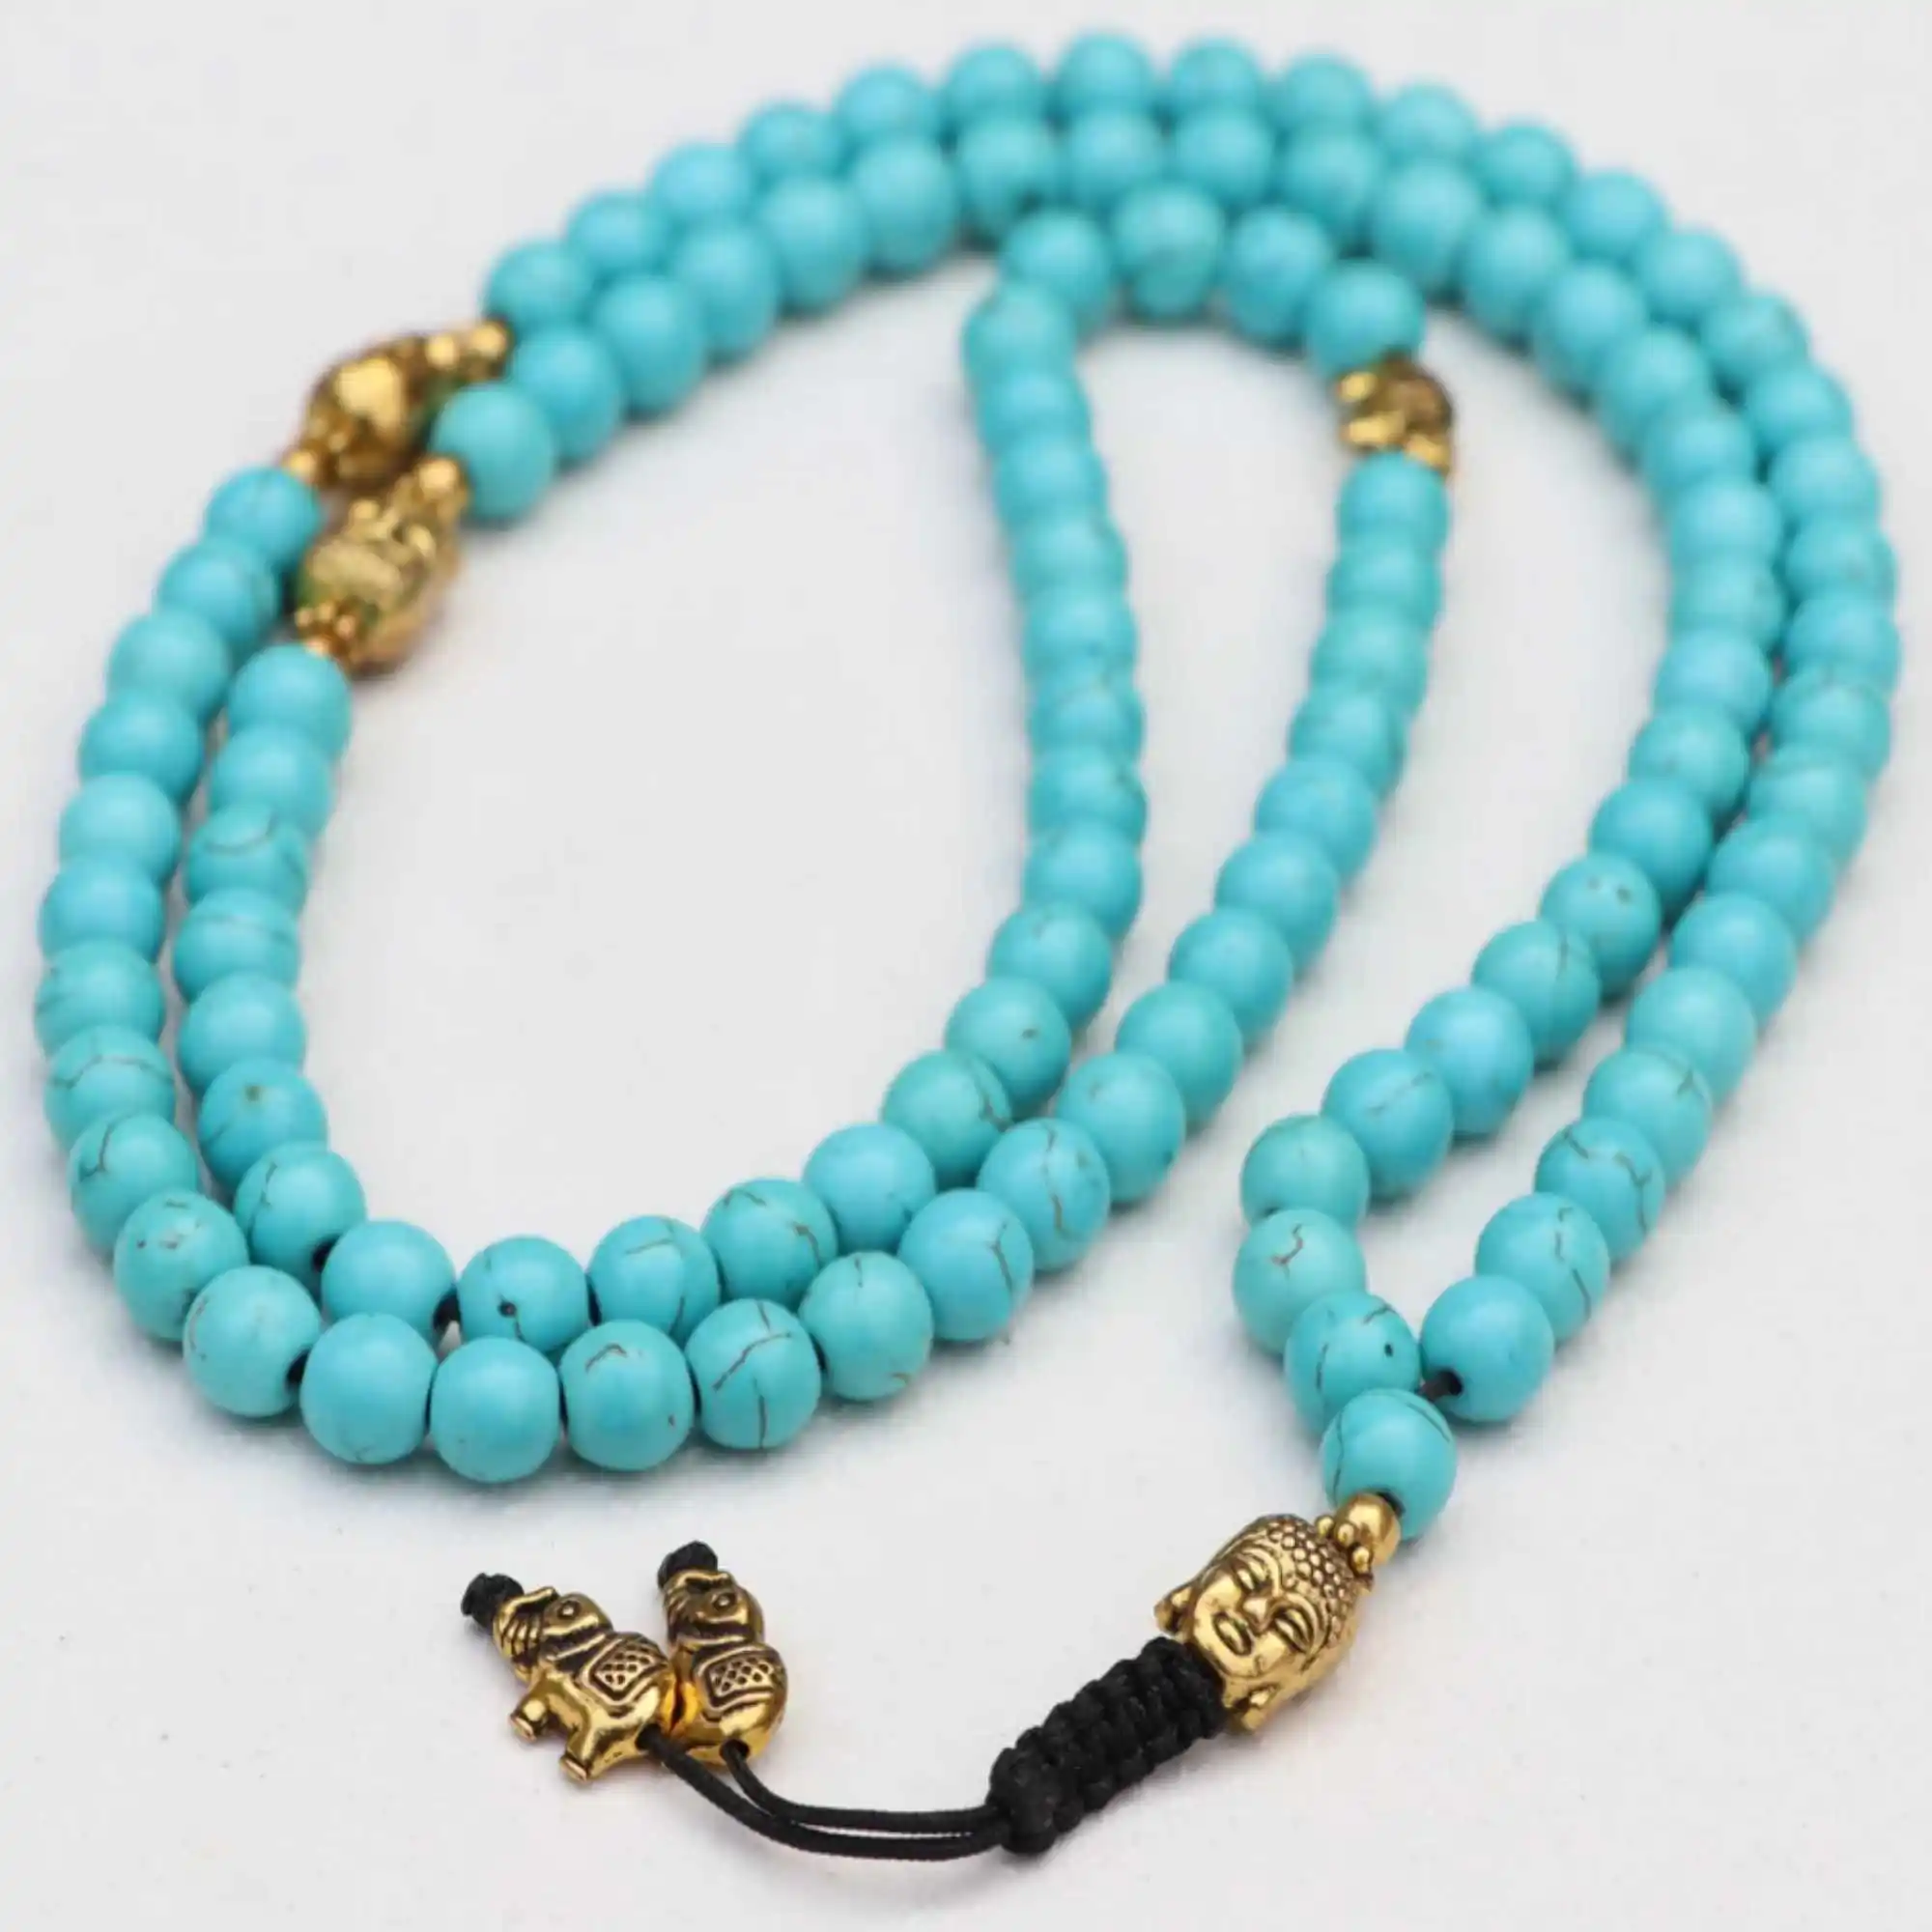 

8mm Natural Turquoise Buddha head gemstone beads Bracelet Practice Wristband Glowing Elegant Healing Spirituality National Style